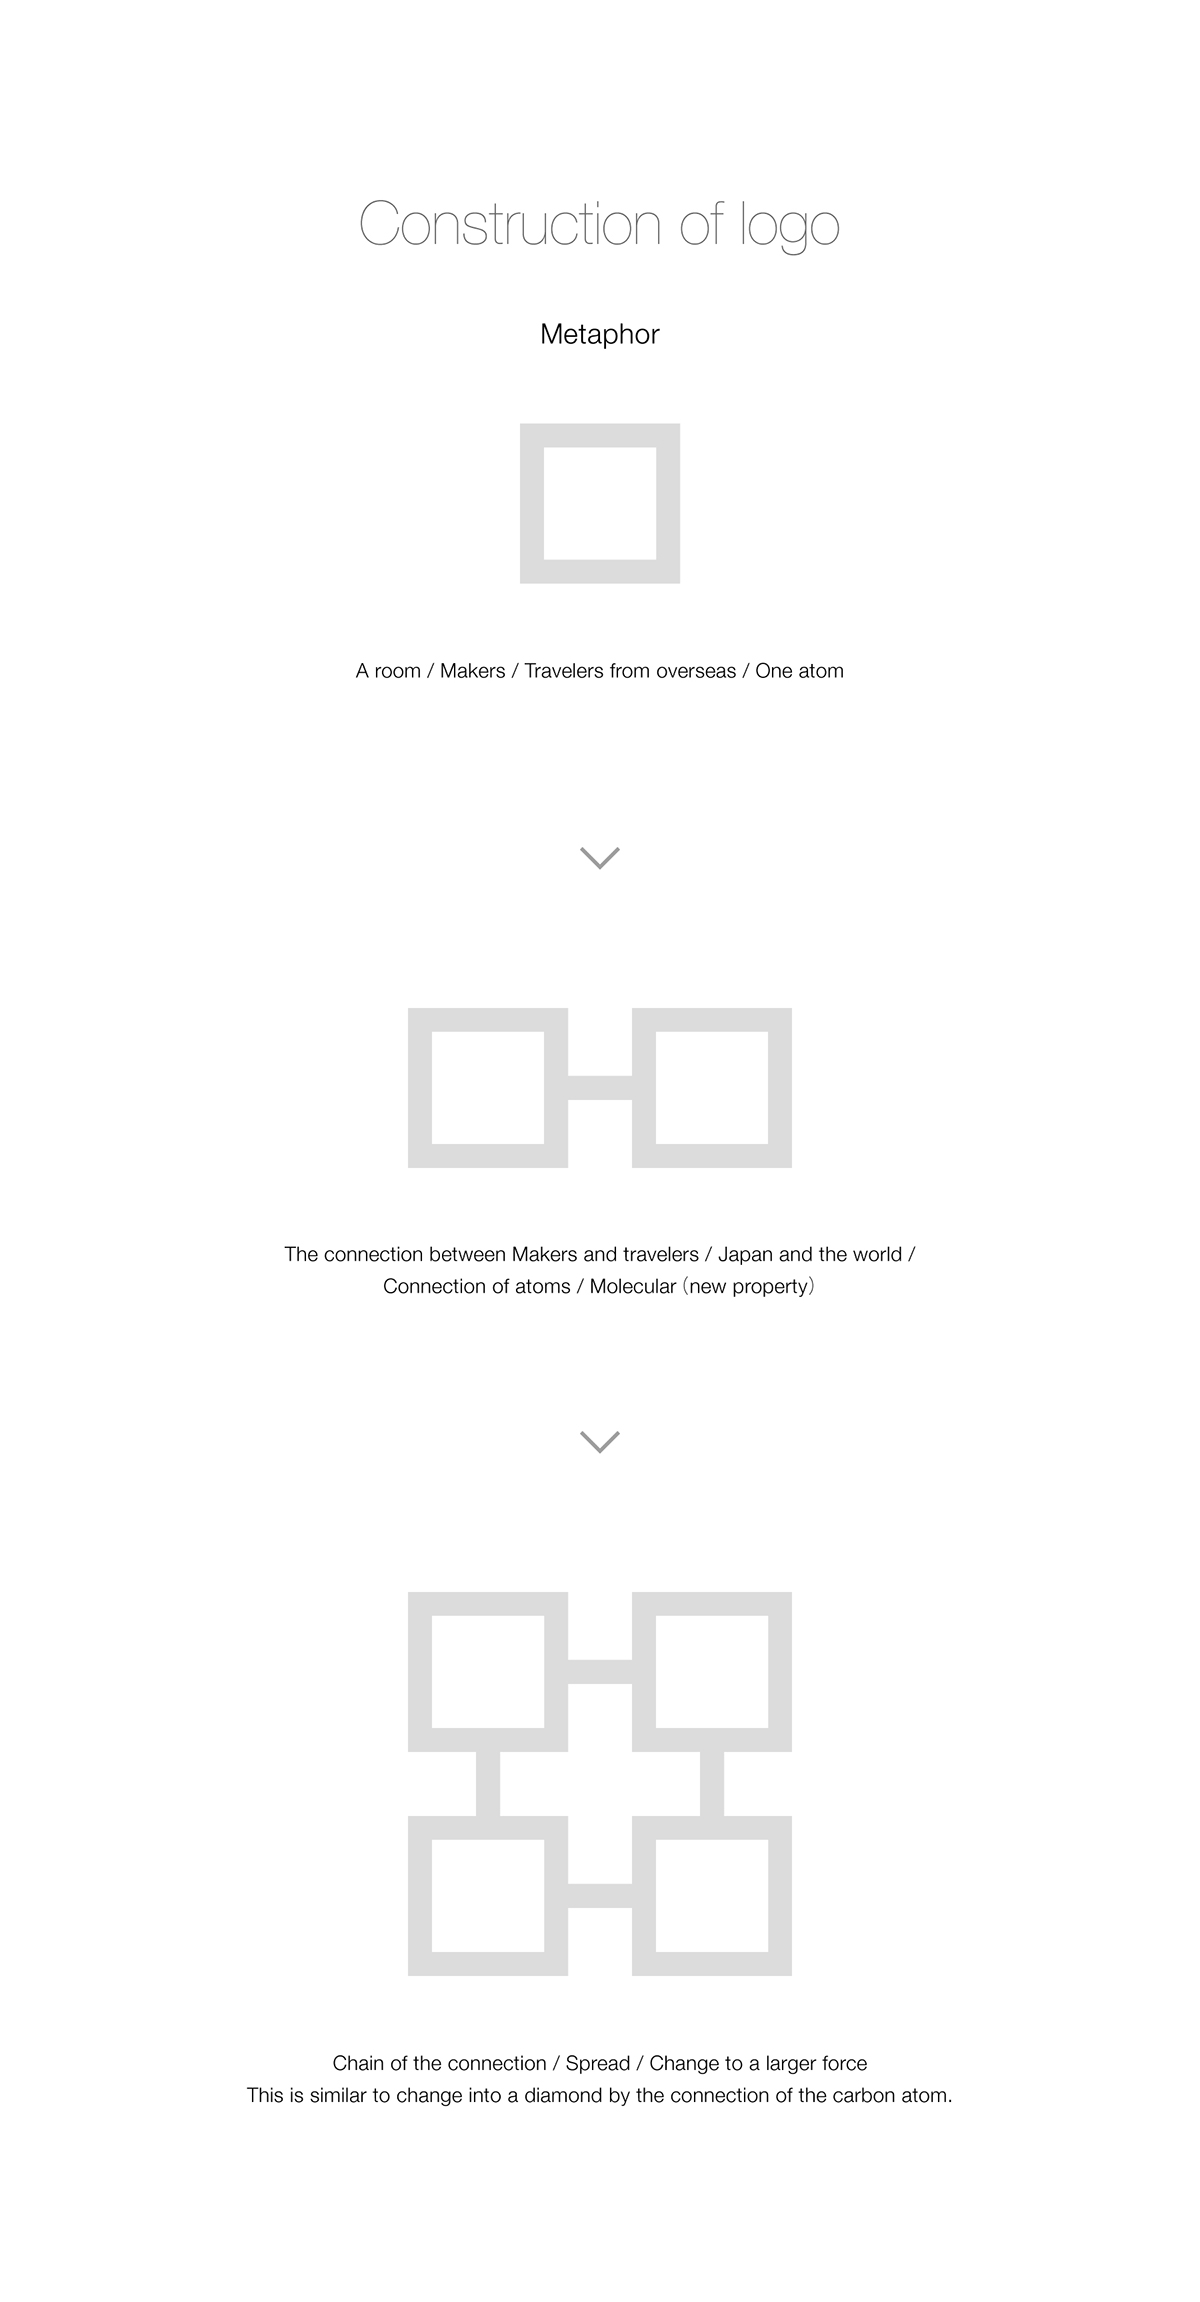 airbnb meetup logo tokyo japan enhanced construction grid color square Dynamic identity art dynamic identity